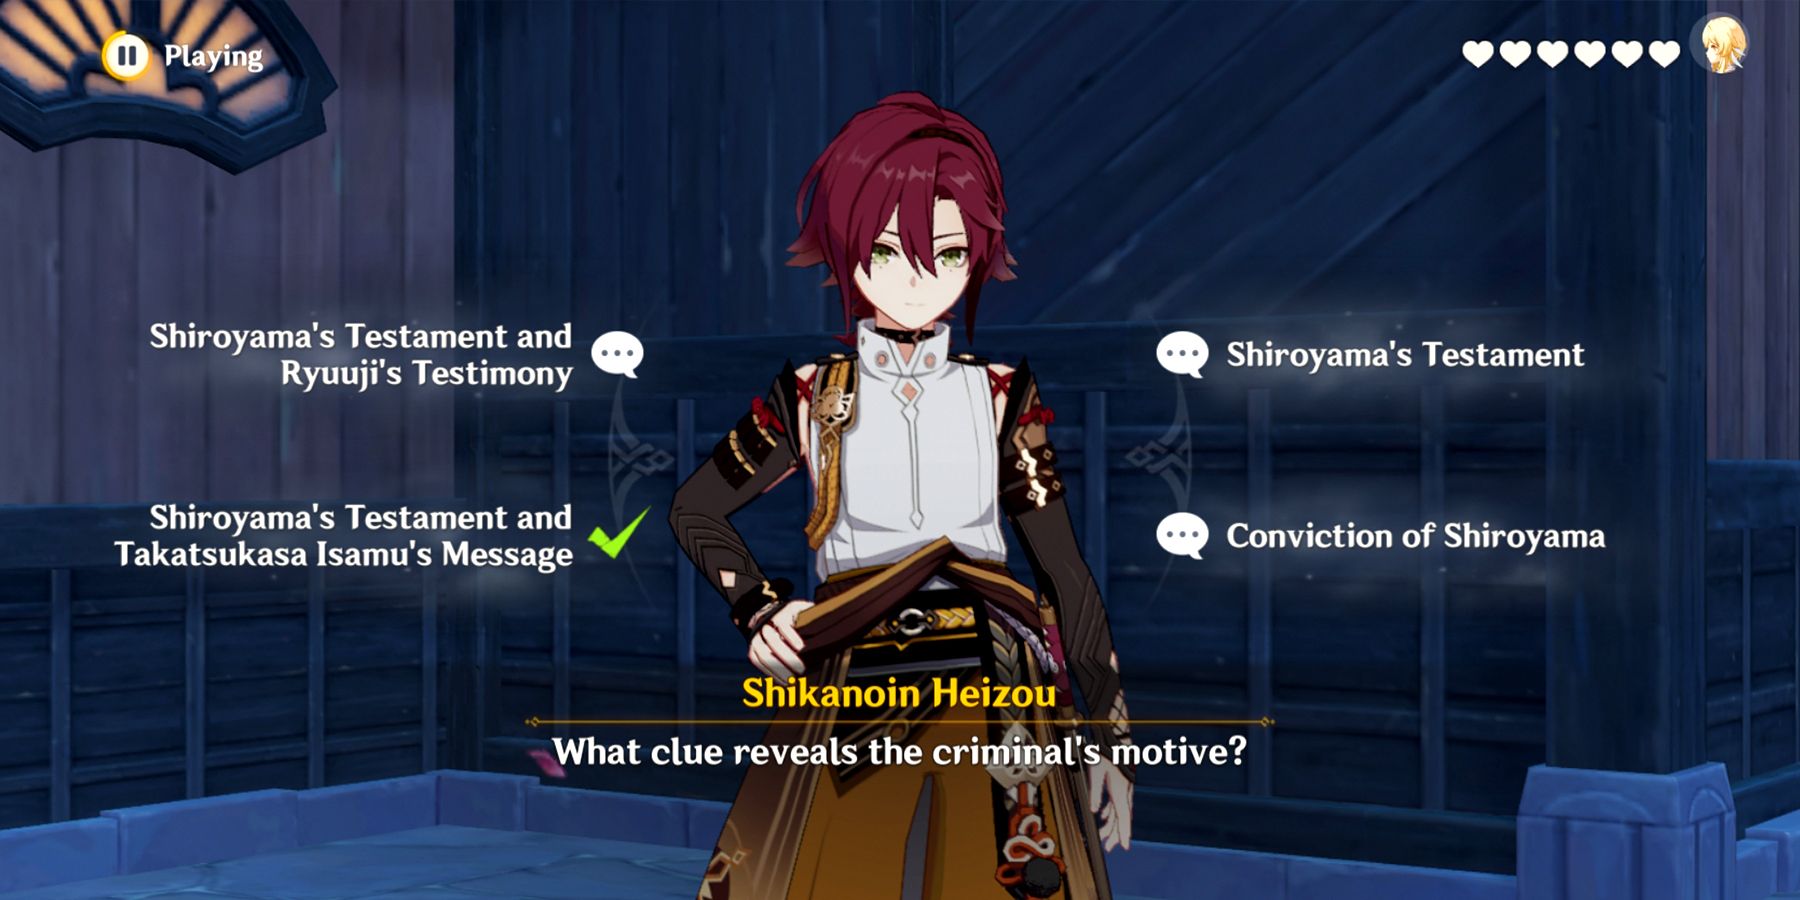 all achievements in shikanoin heizou’s hangout event 3